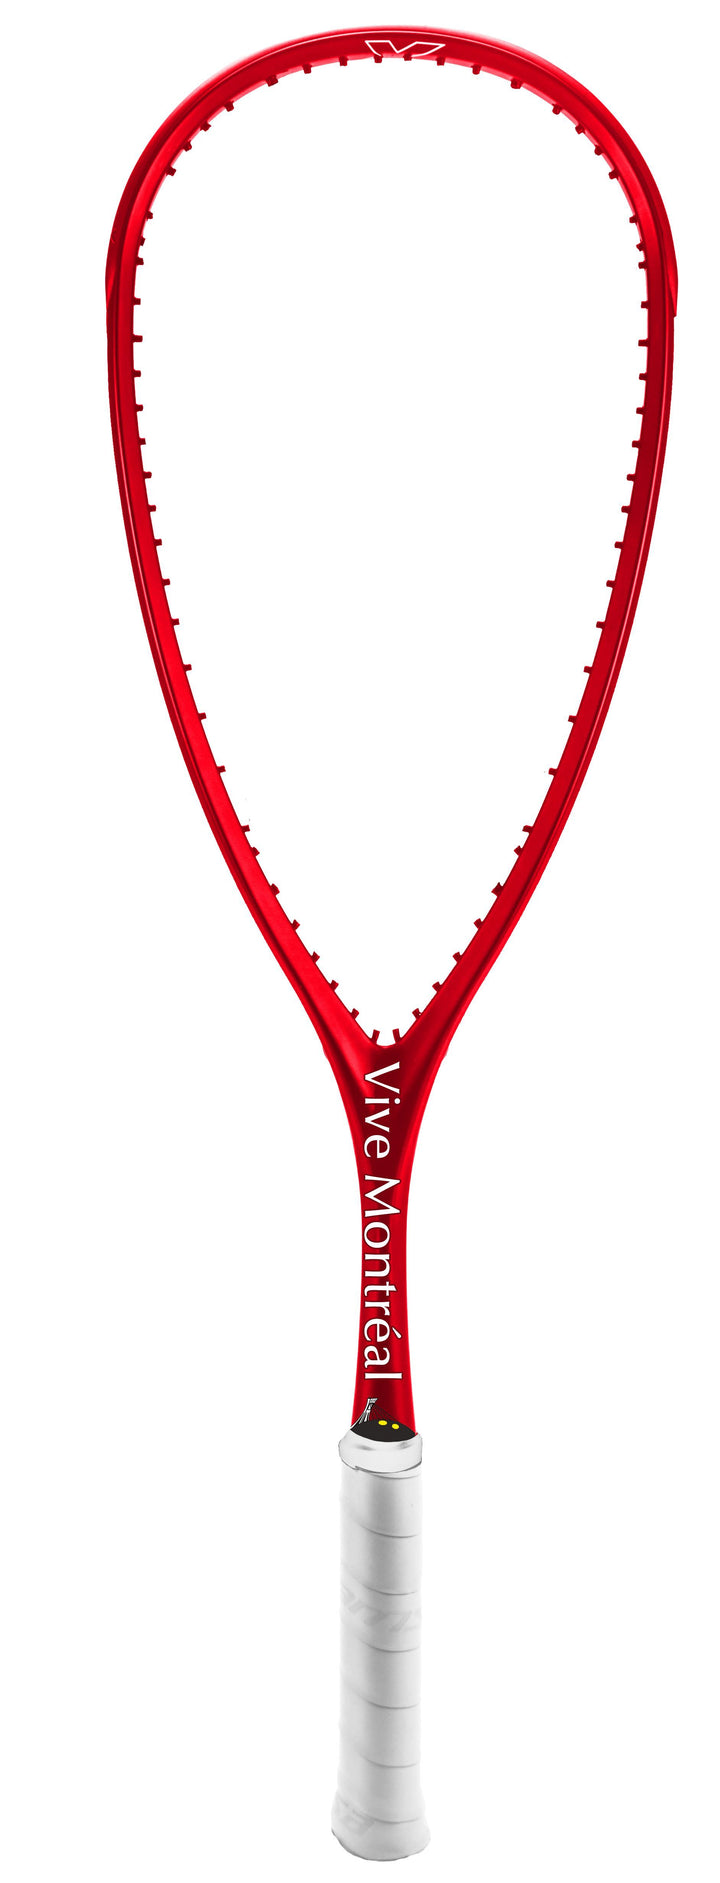 Xamsa Onyx - Vive Montreal - Limited Edition Squash Racquet with Top Bumper Squash Racquets Xamsa No Strings 